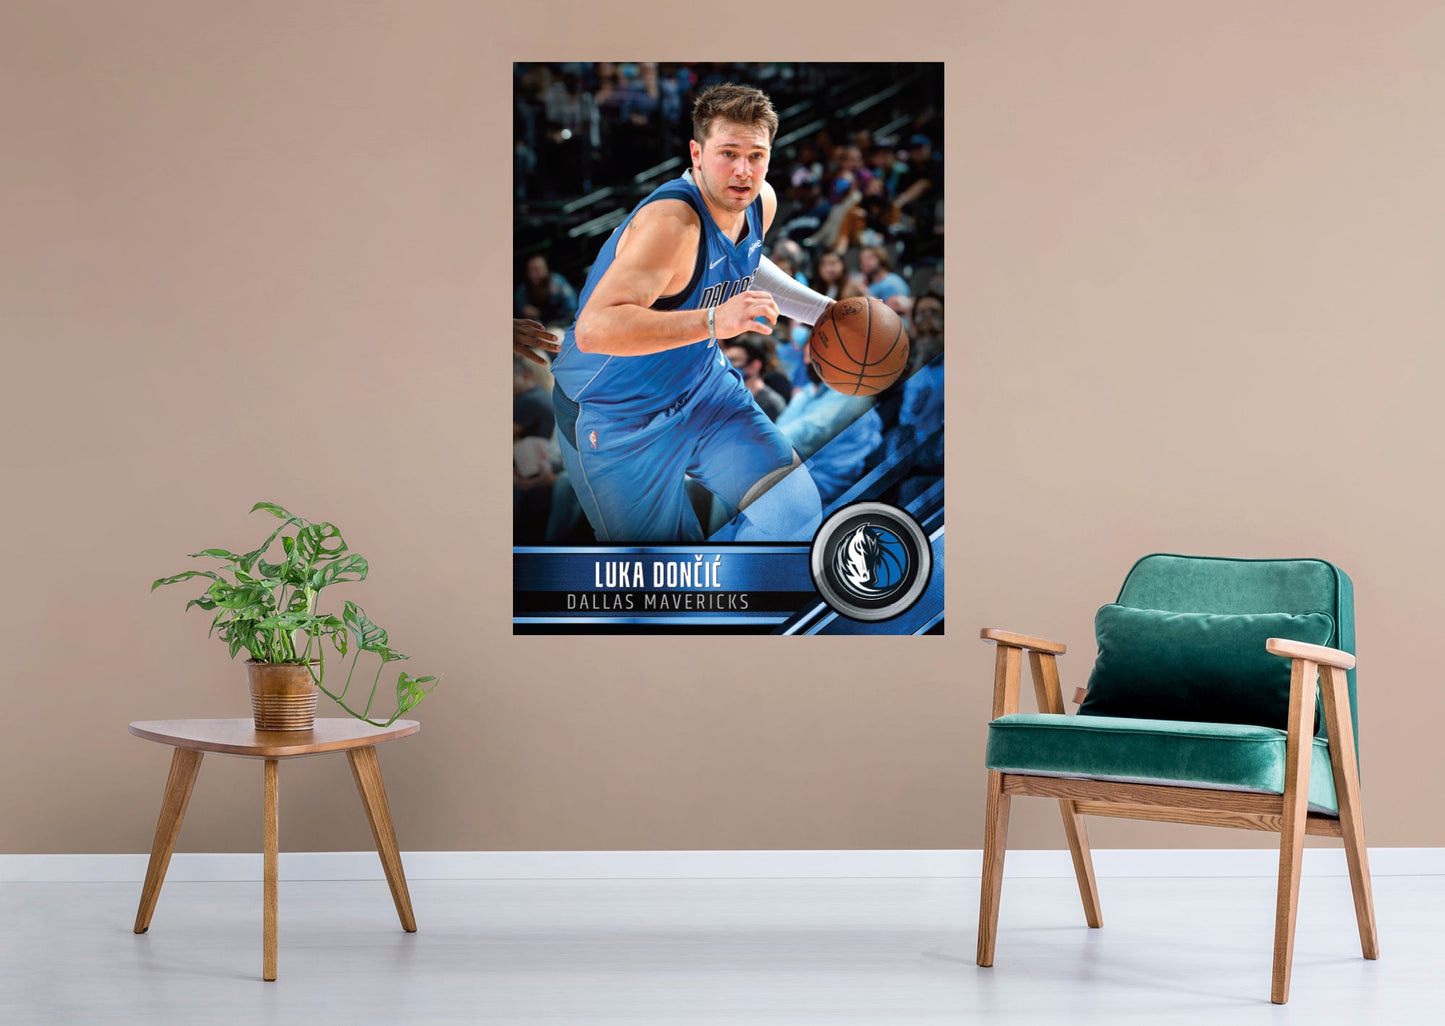 Dallas Mavericks: Luka Dončić Poster - Officially Licensed NBA Removable Adhesive Decal